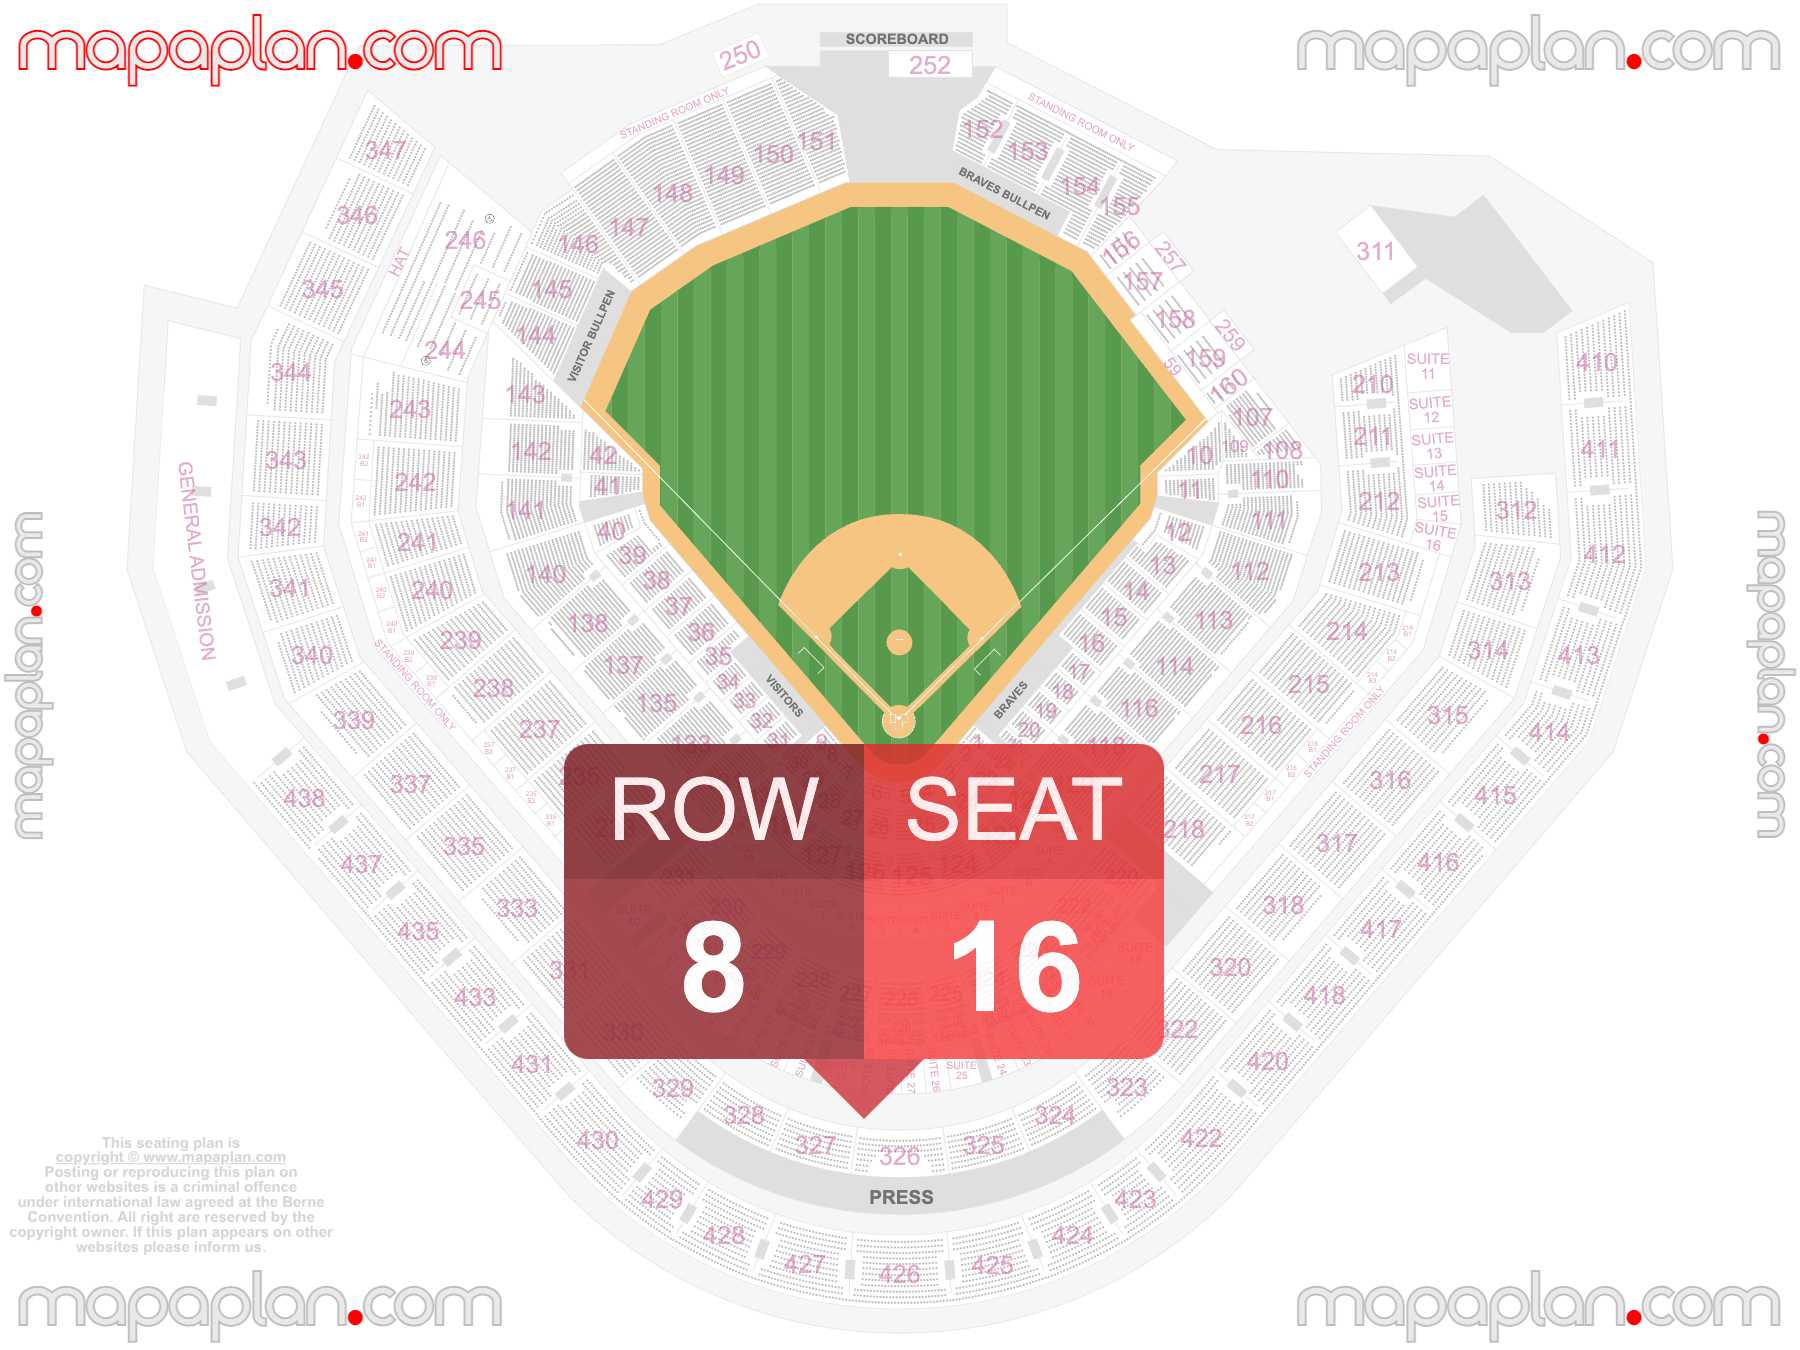 Atlanta Truist Park seating chart Concert & Braves Stadium Baseball inside capacity view arrangement plan - Interactive virtual 3d best seats & rows detailed stadium image configuration layout